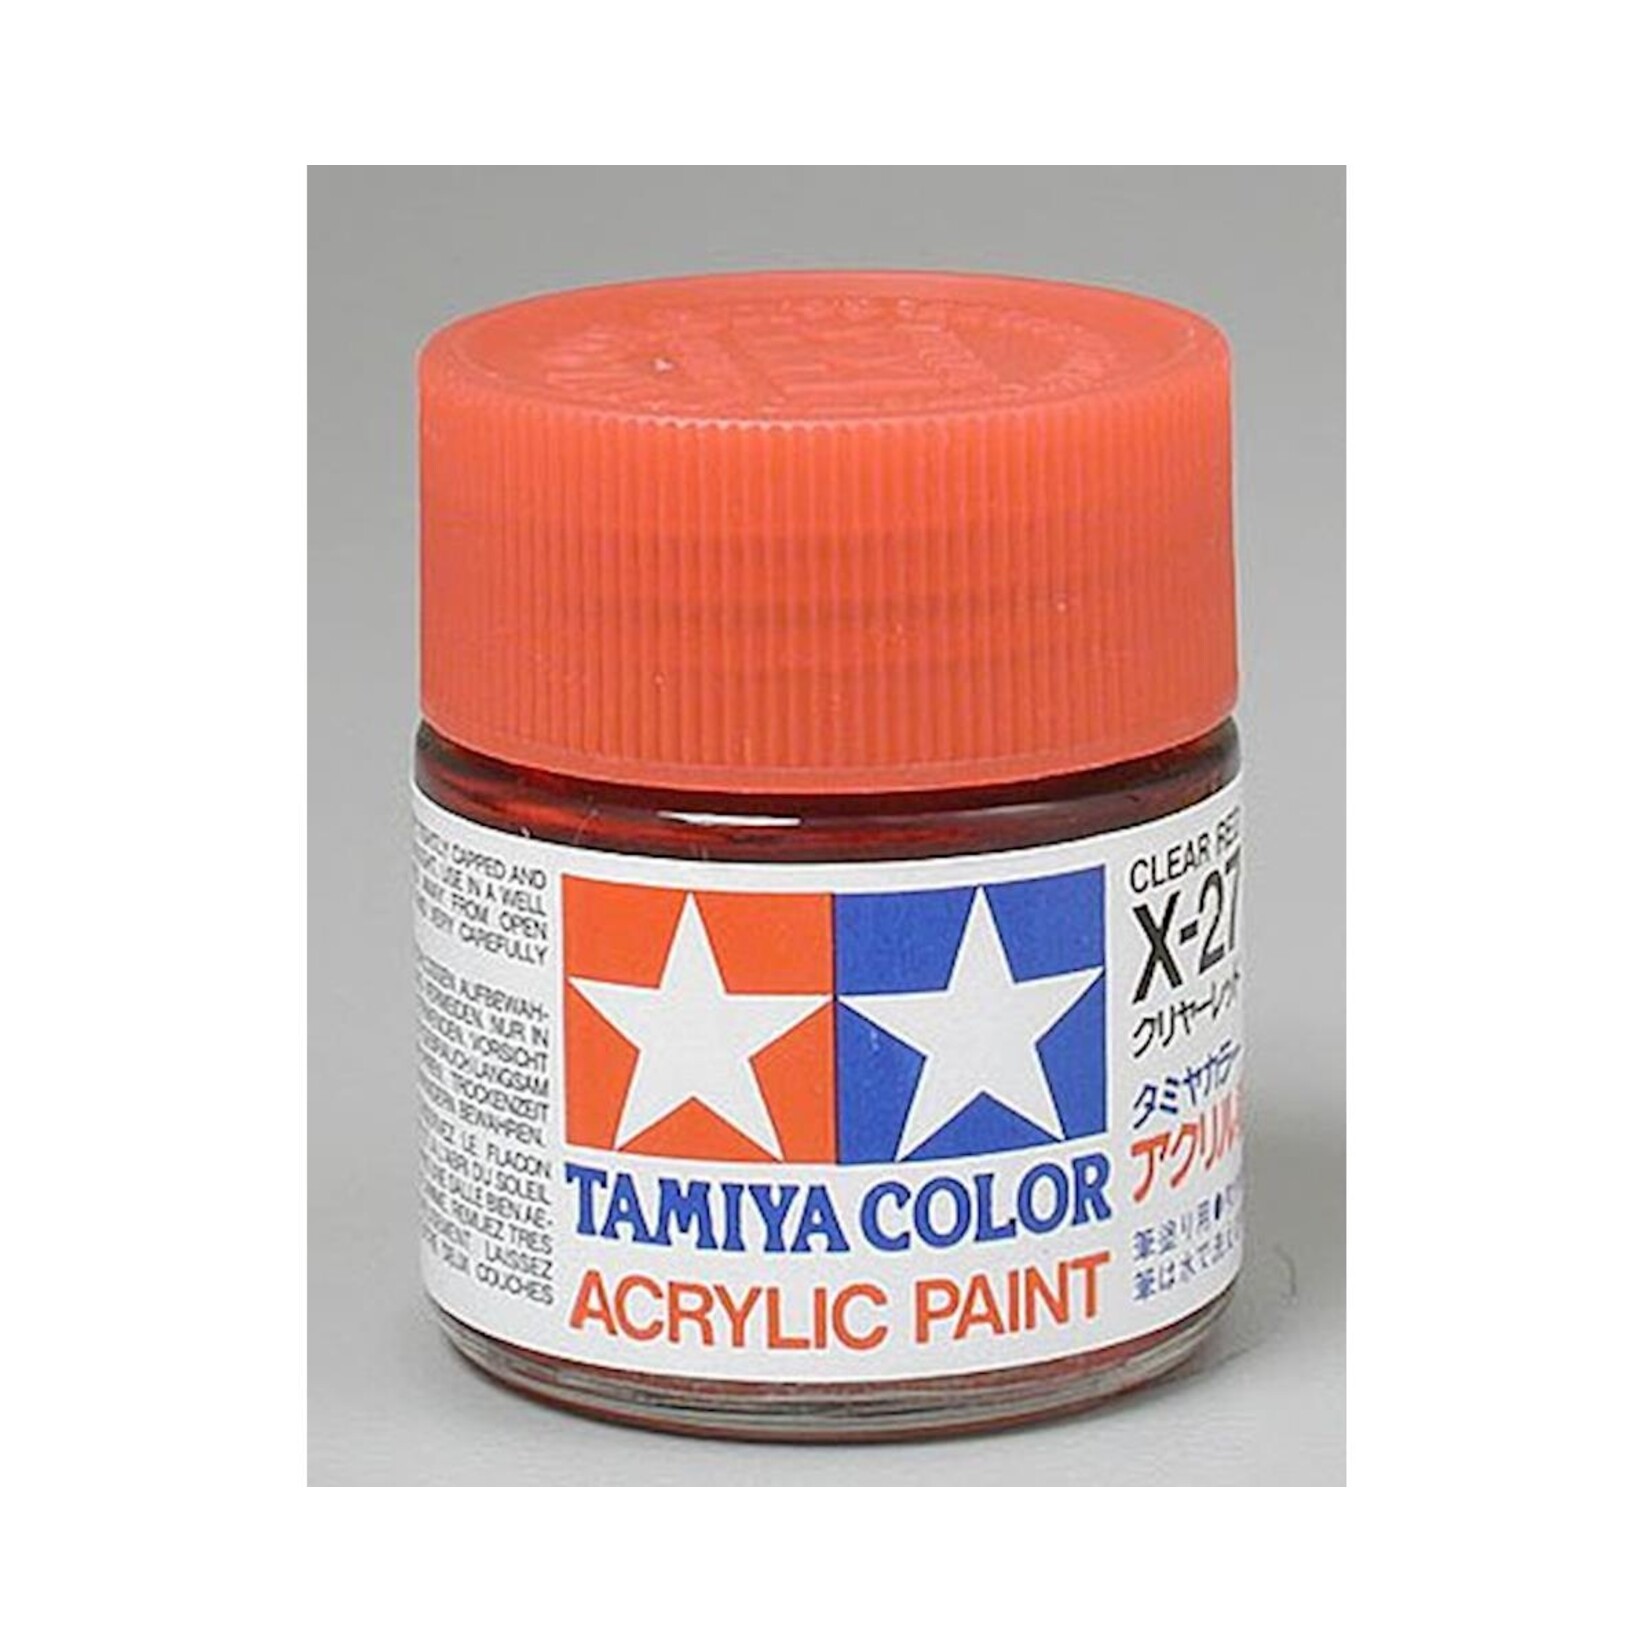 Tamiya Tamiya X-27 Clear Red Gloss Finish Acrylic Paint (23ml) #81027